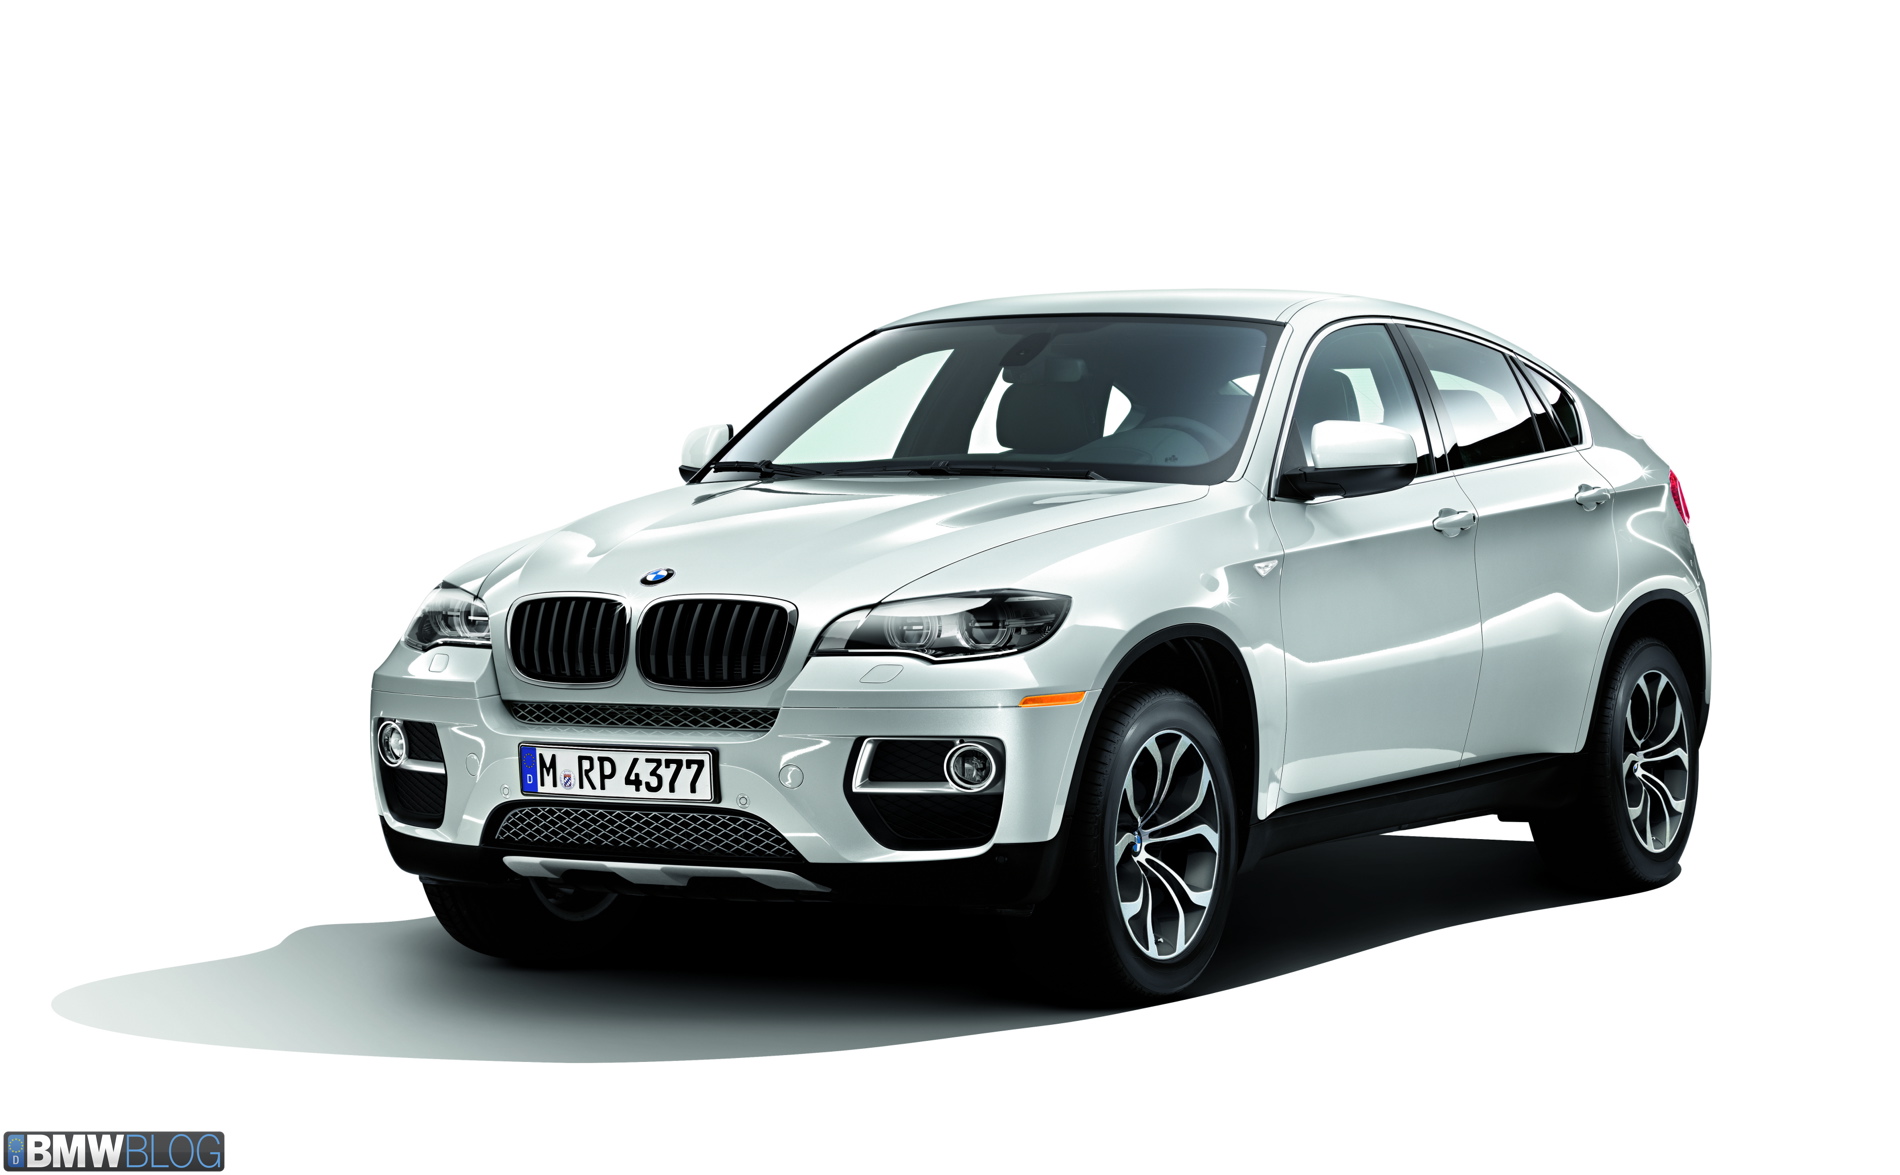 2013 BMW Individual X6 Performance Edition01